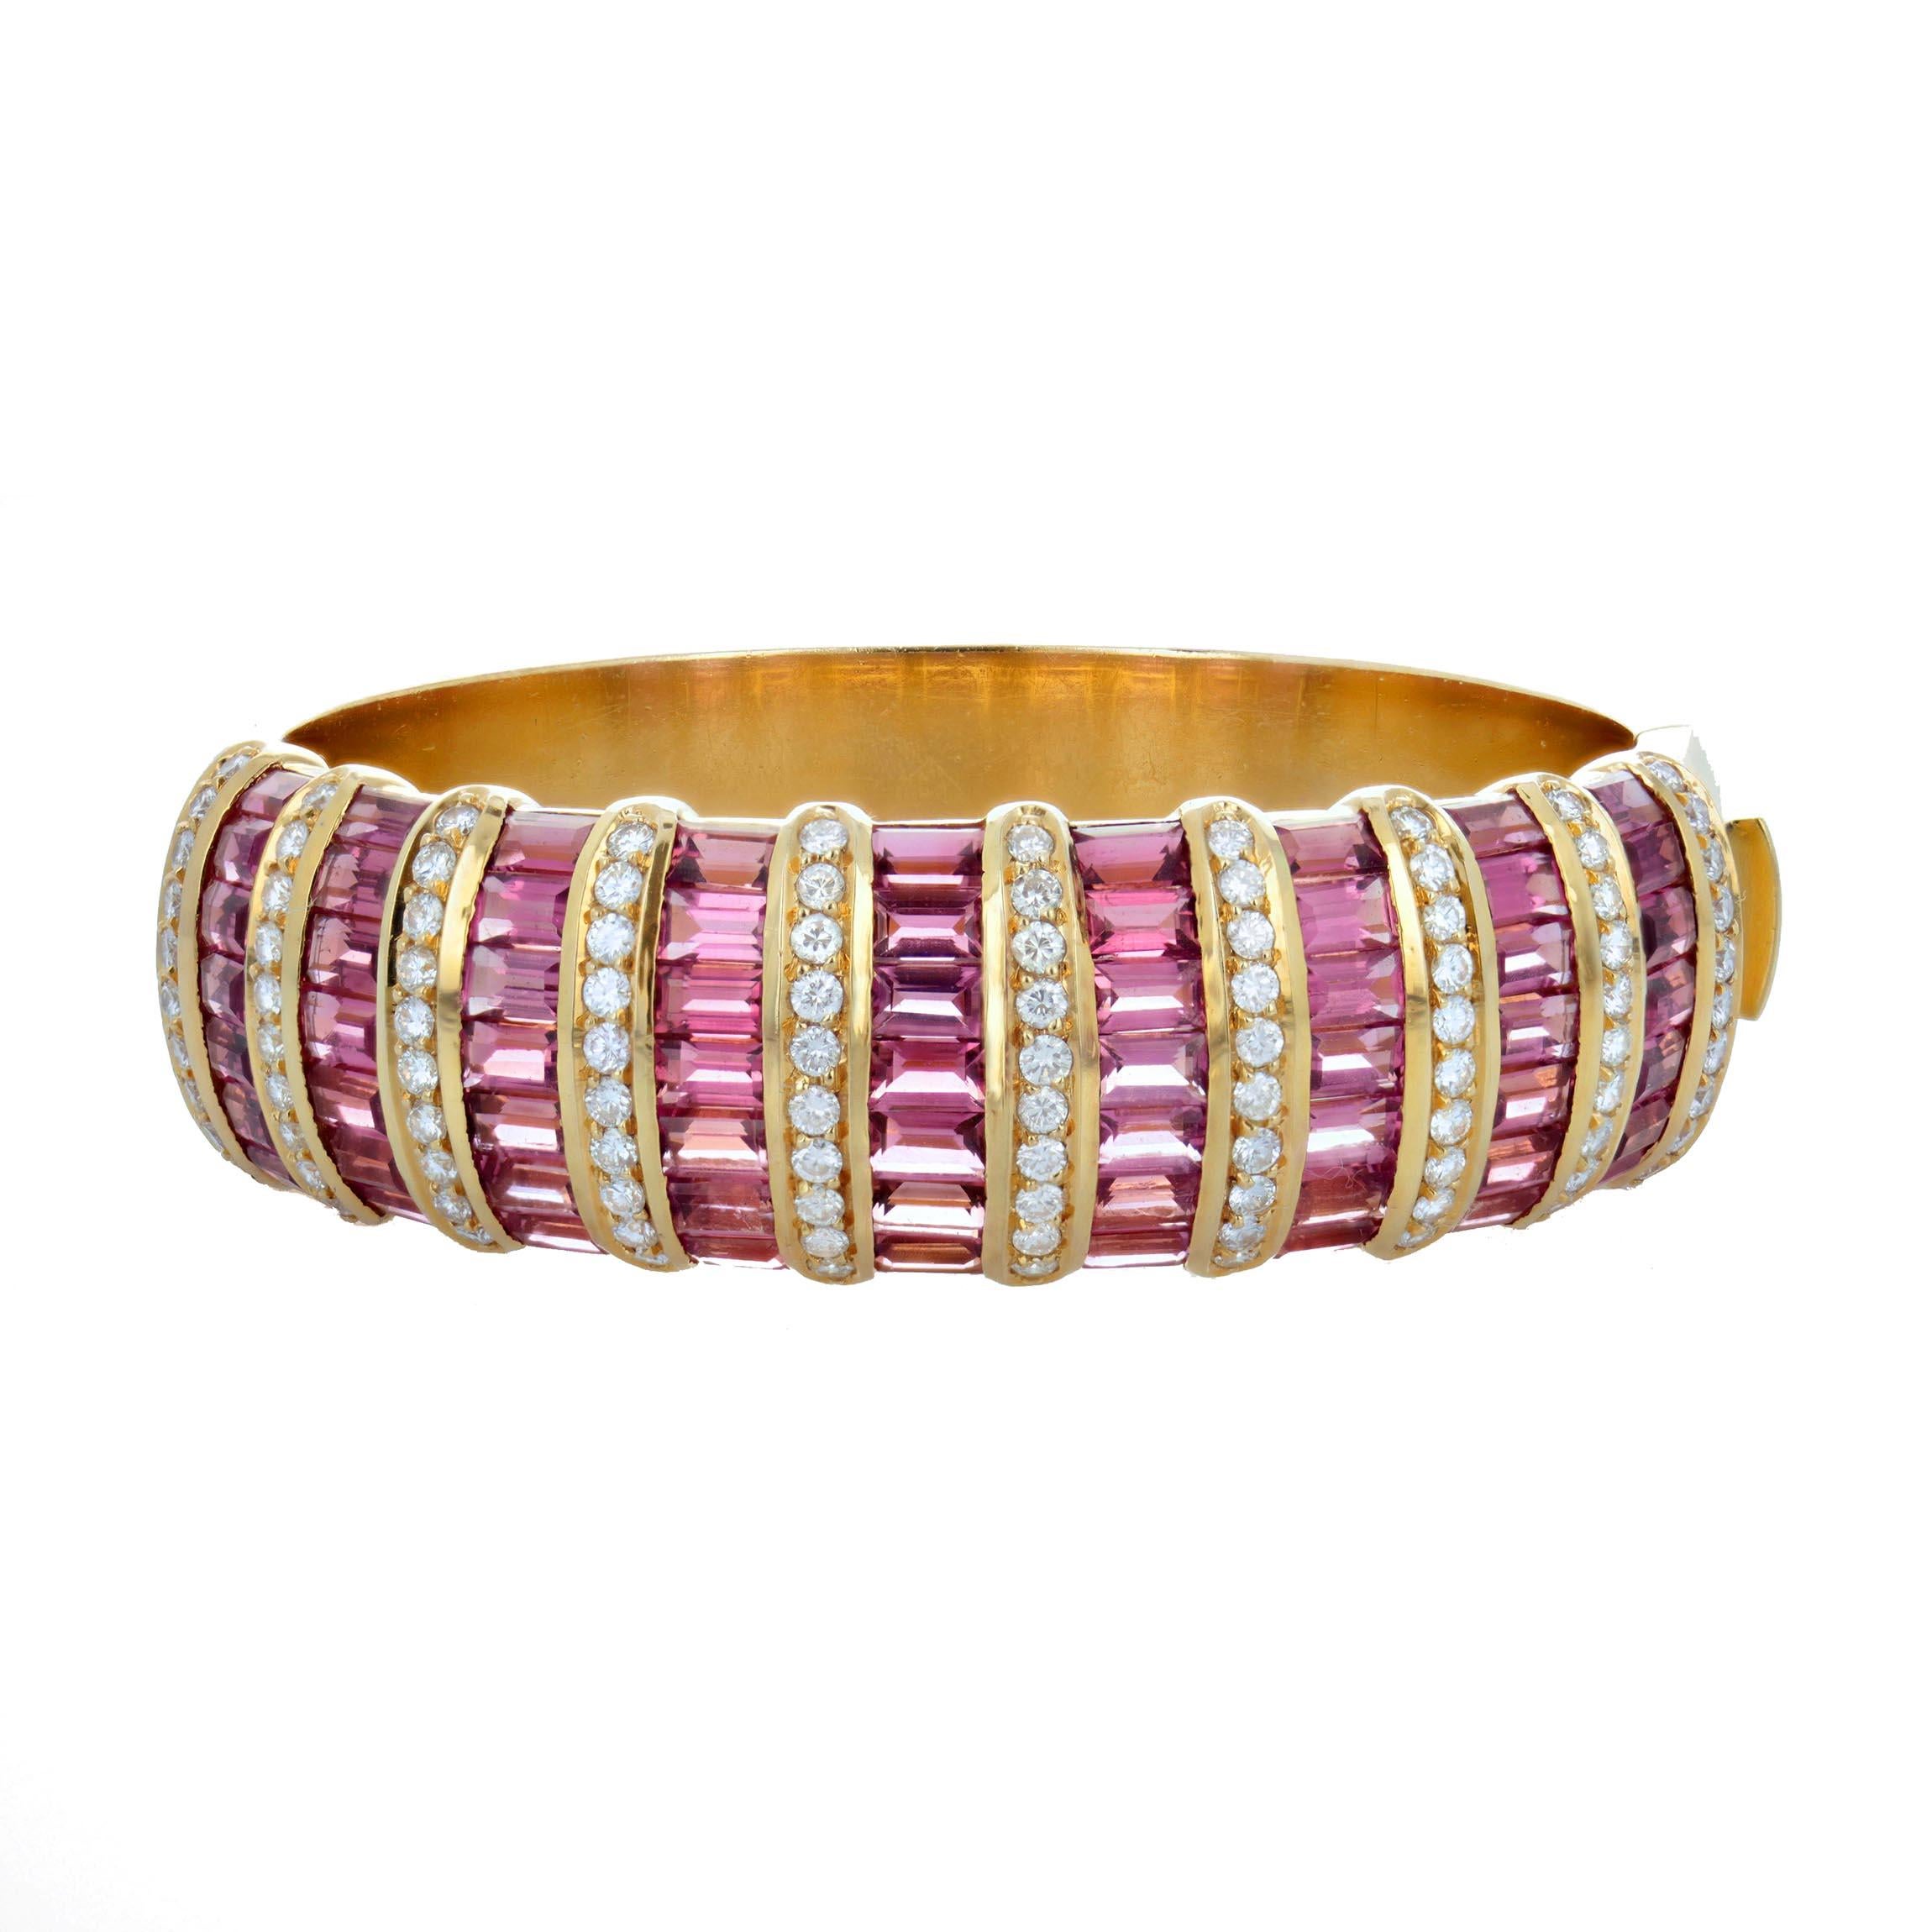 H. Stern Diamond, Pink Tourmaline, and Gold Bangle Bracelet